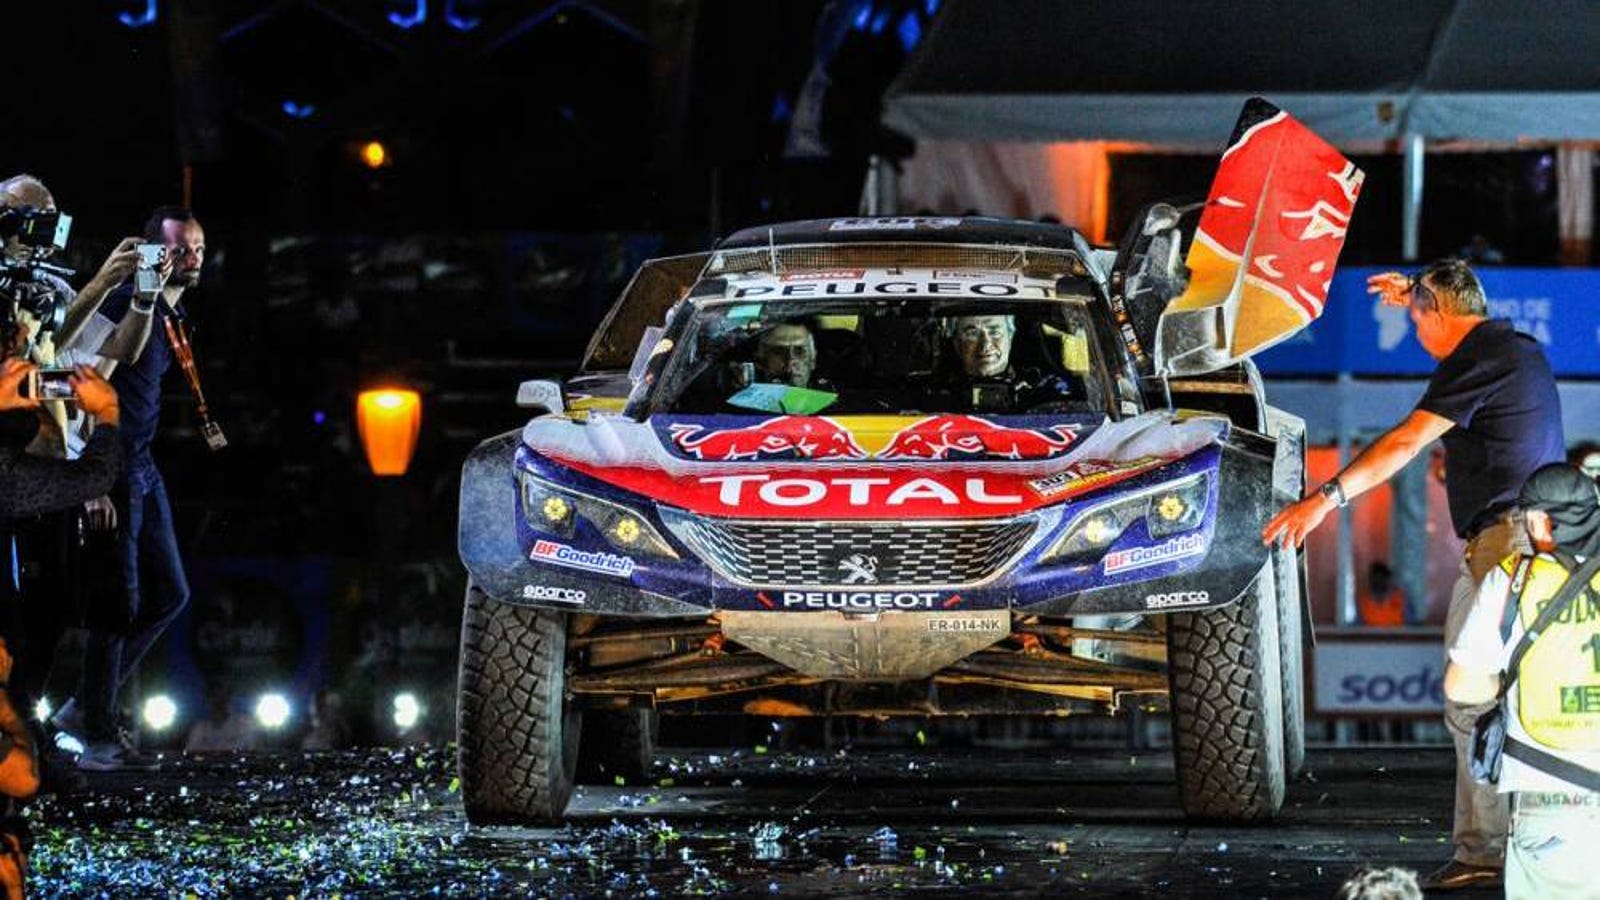 Carlos Sainz Finds Dakar Victory As Peugeot Ends Program